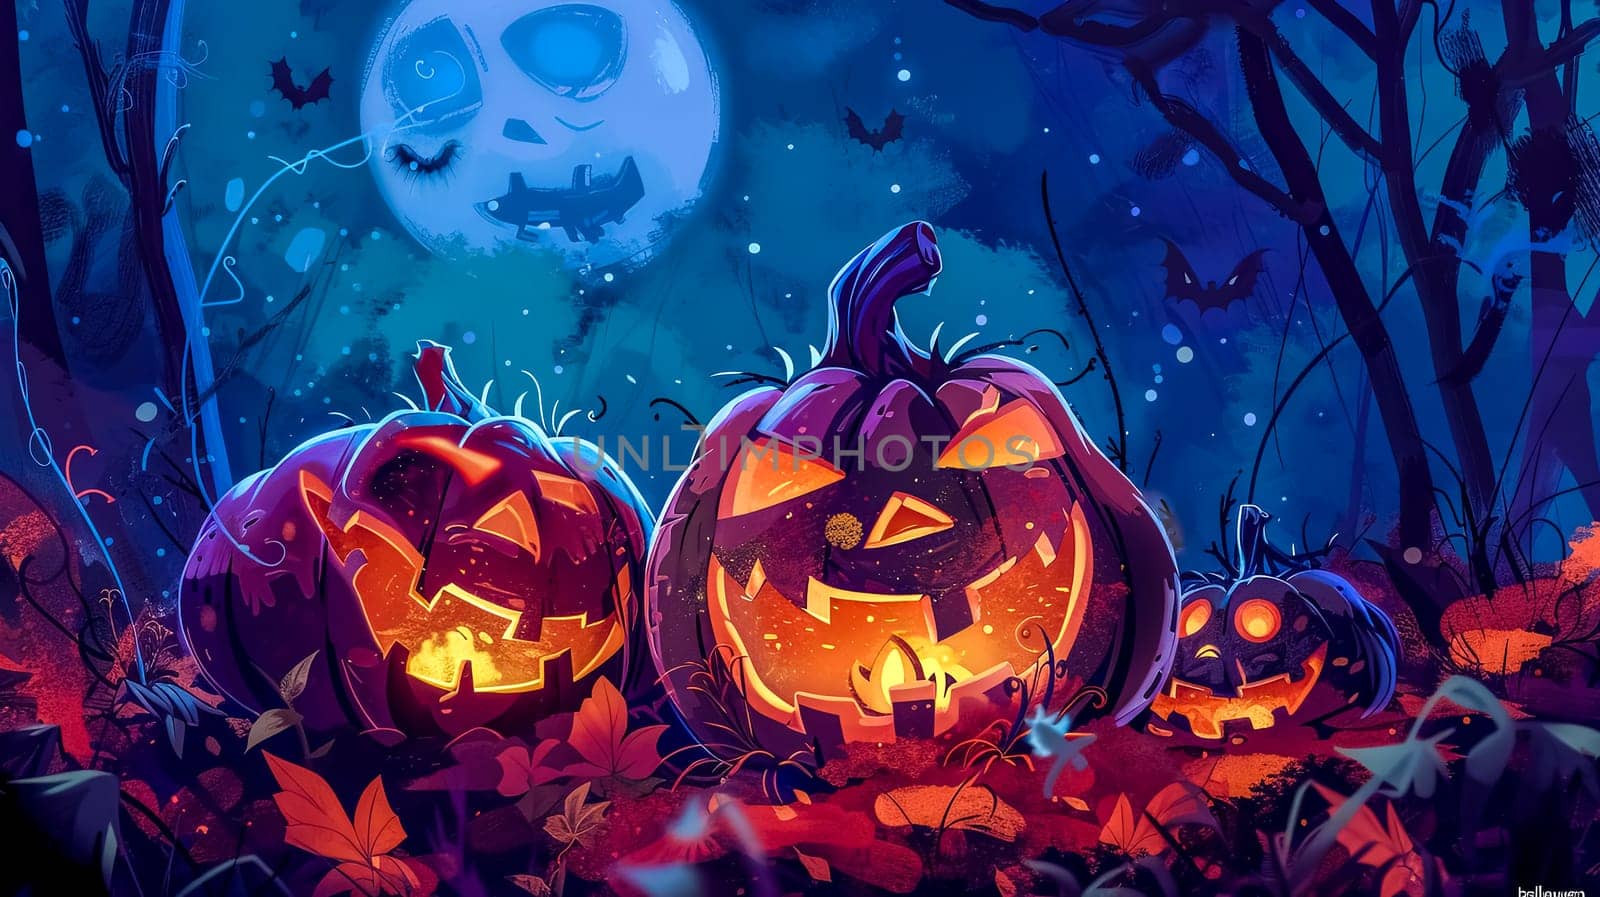 Illustration of glowing jack-o'-lanterns in a mystical halloween night setting